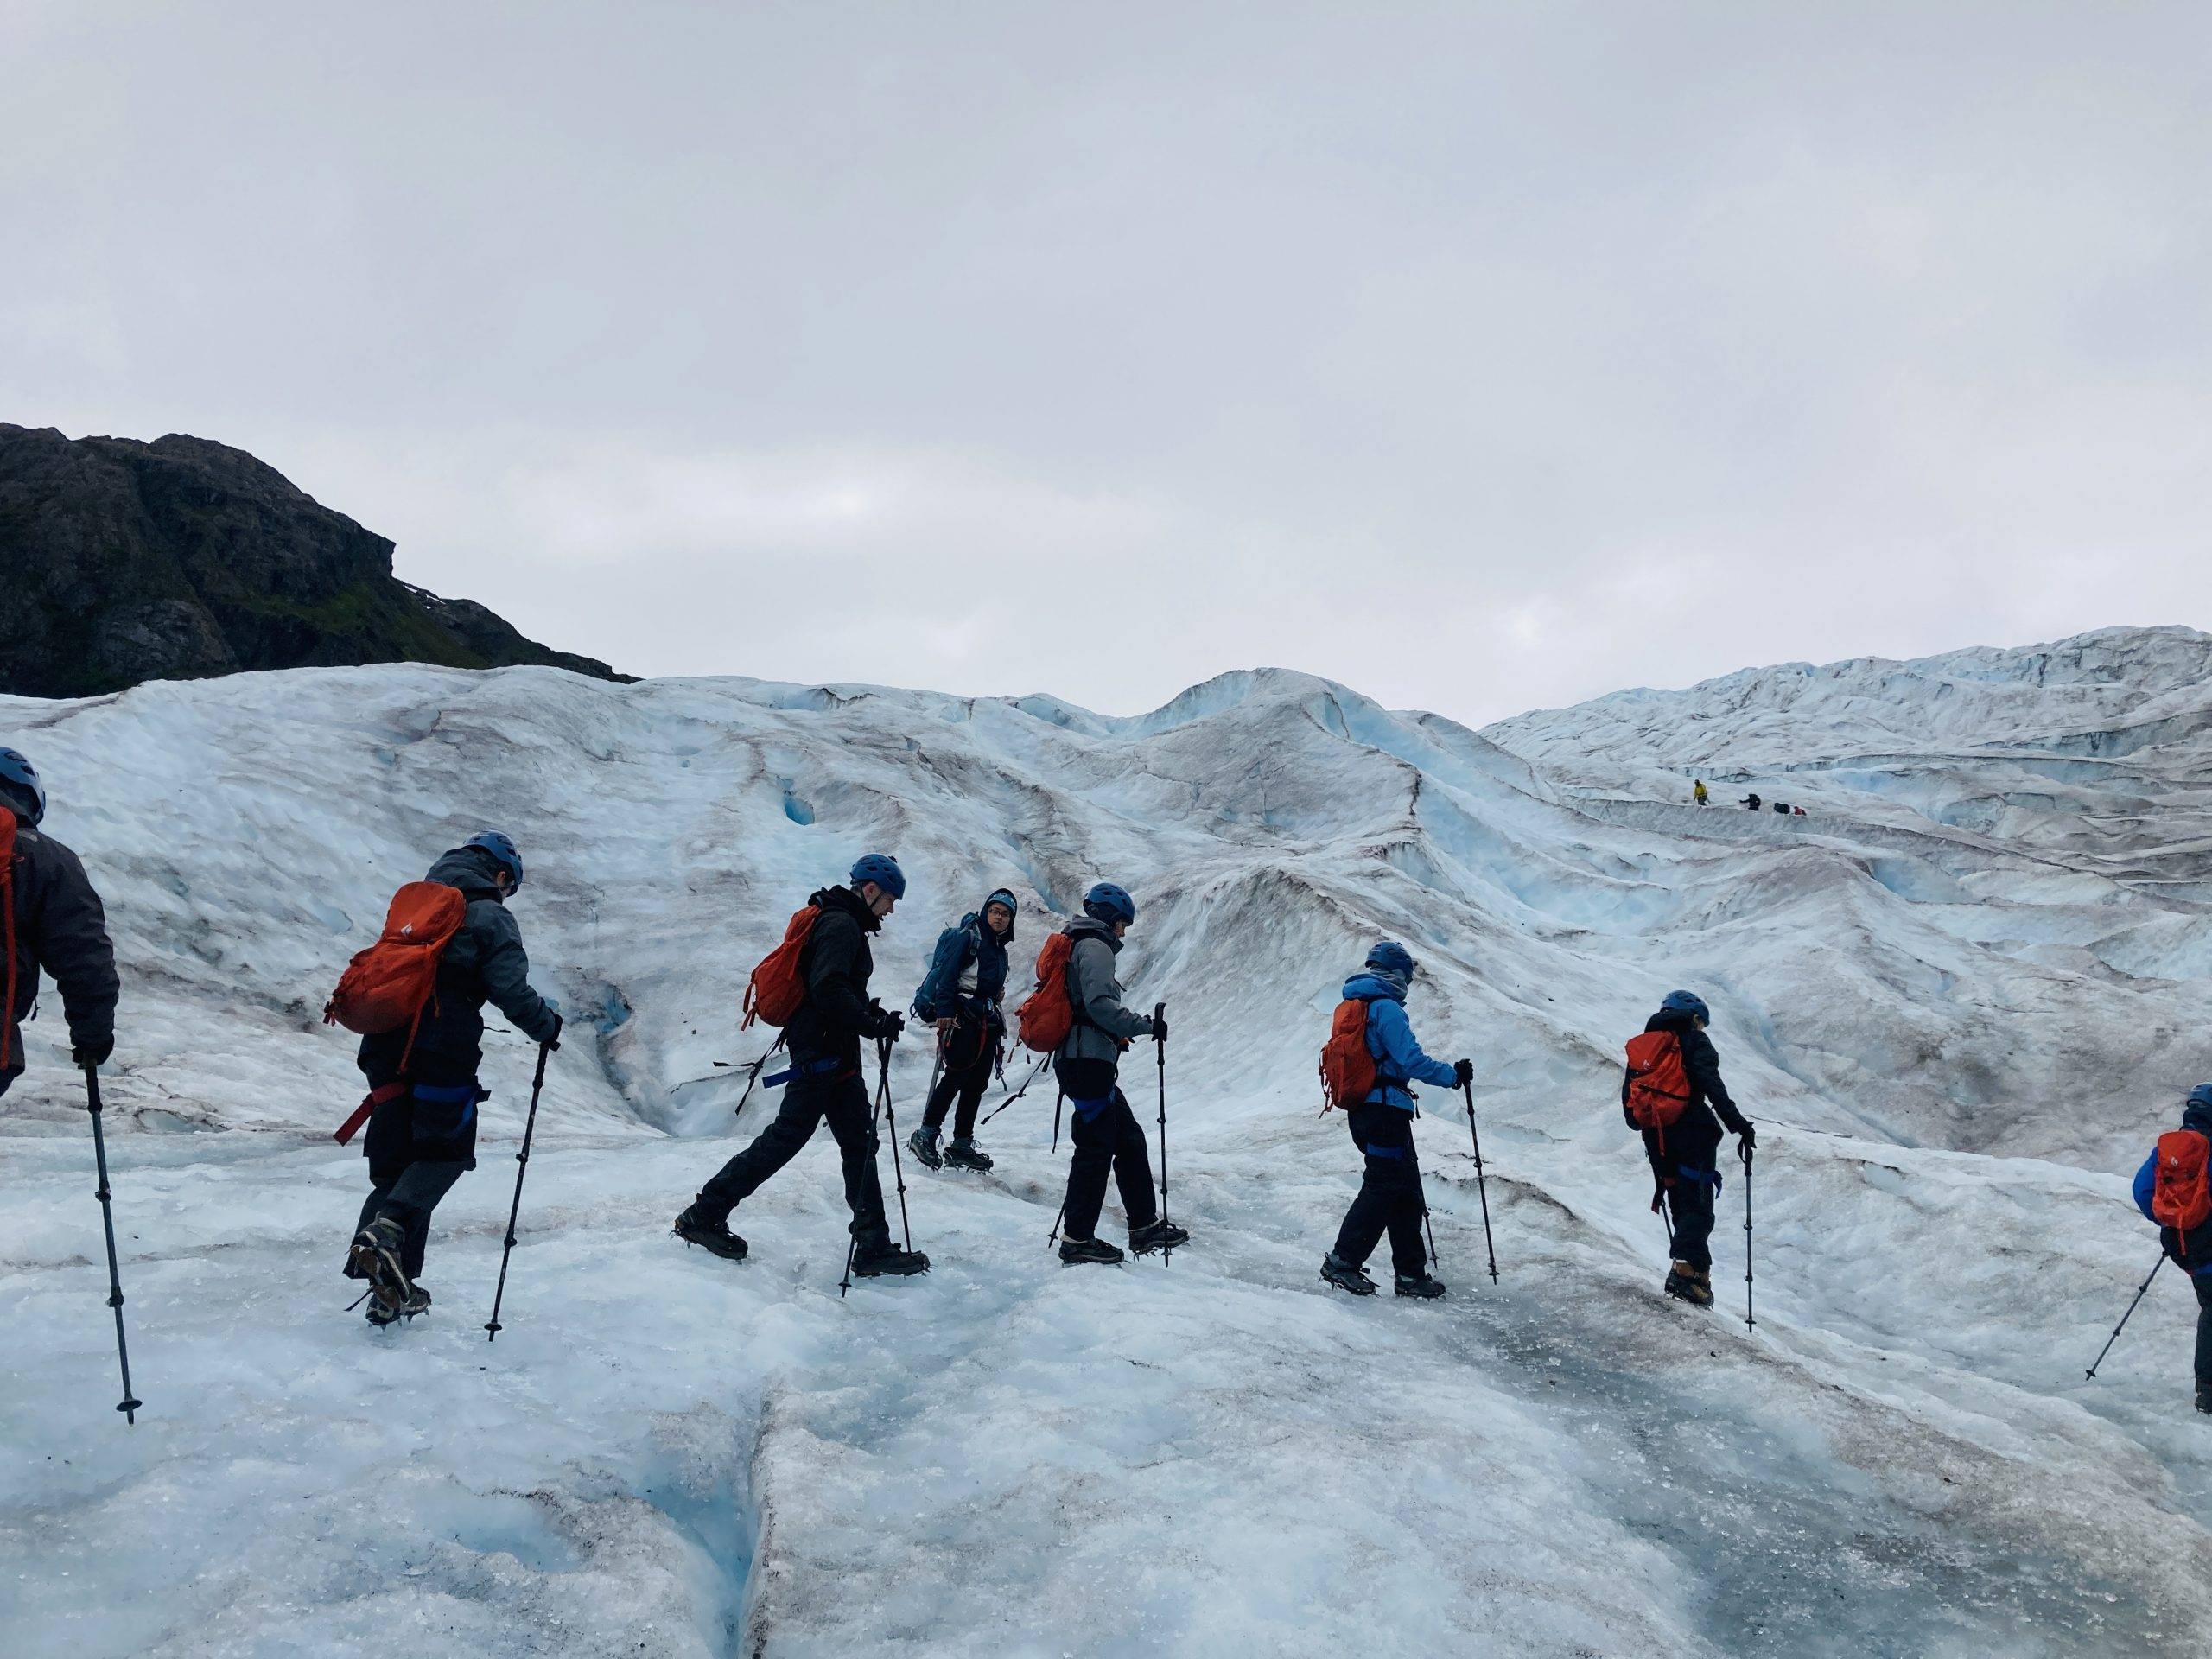 TRIP REPORT: 7/22/22 Exit Glacier Ice Hiking Adventure